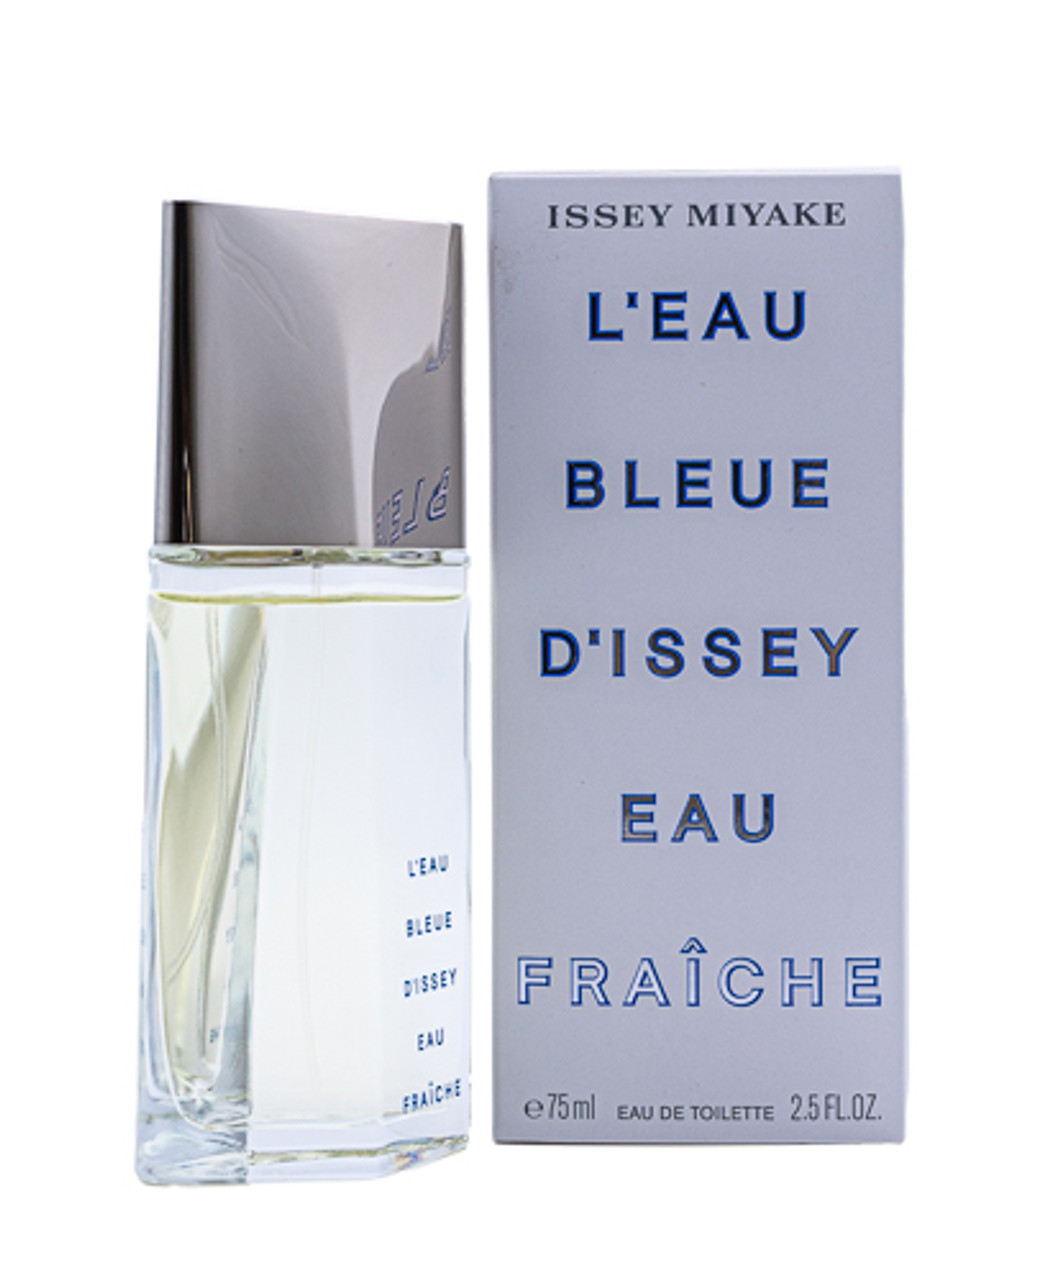 L'eau Bleue D'issey Eau Fraiche by Issey Miyake 2.5 oz EDT for Men